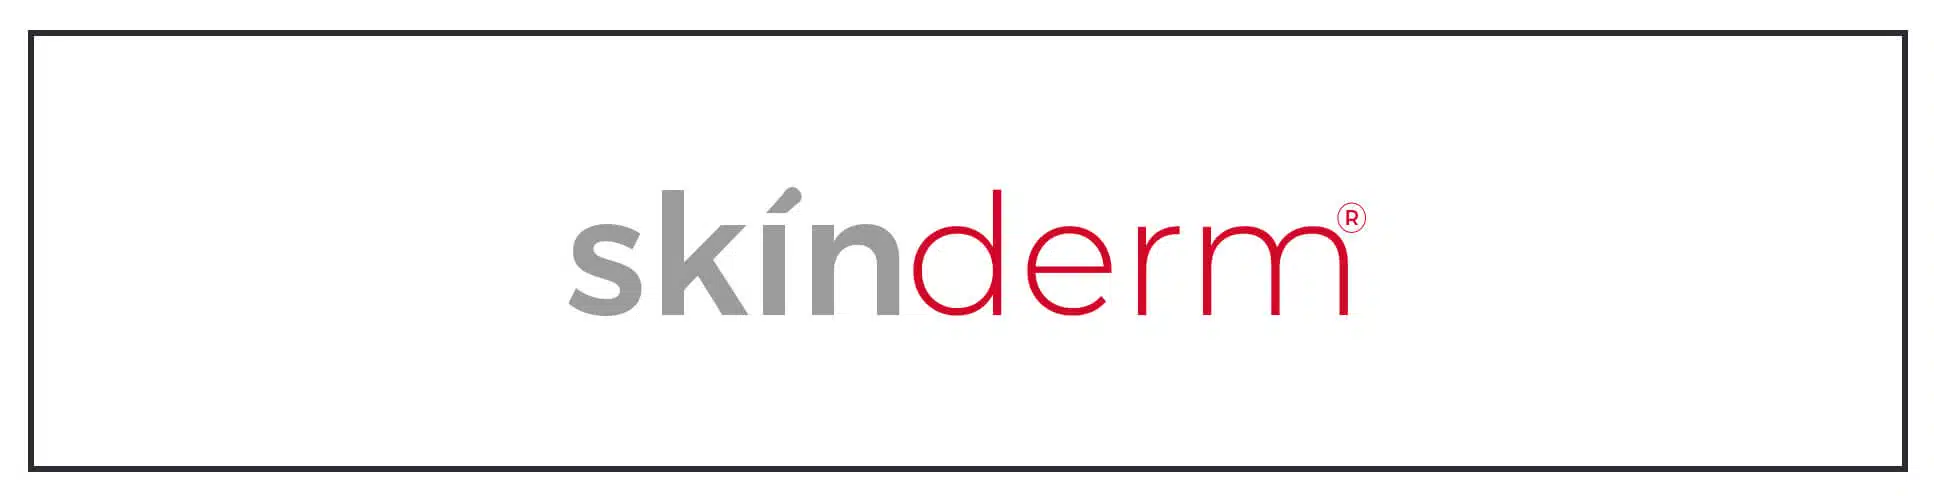 Skinderm logo on a white background.